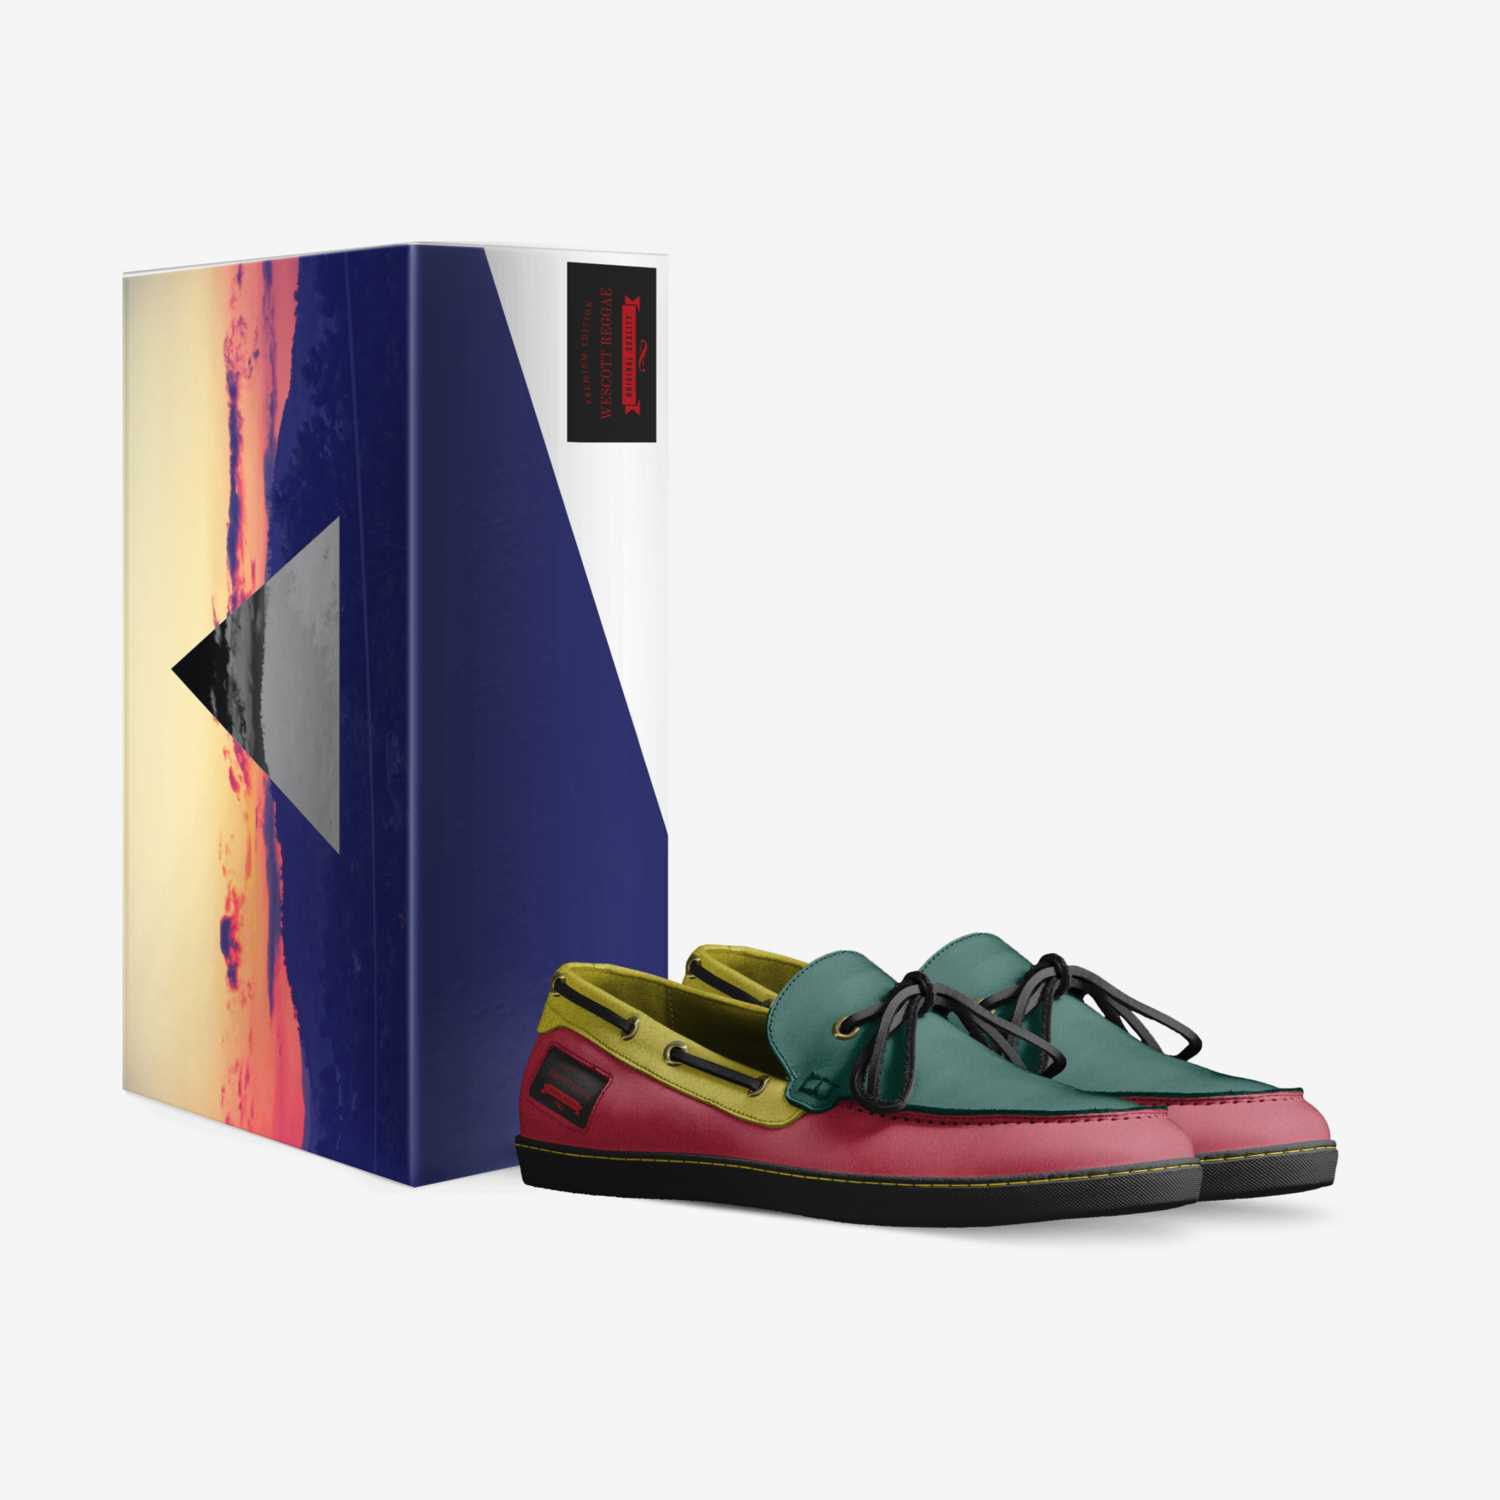 Wescott Reggae custom made in Italy shoes by Gabriel Wescott | Box view